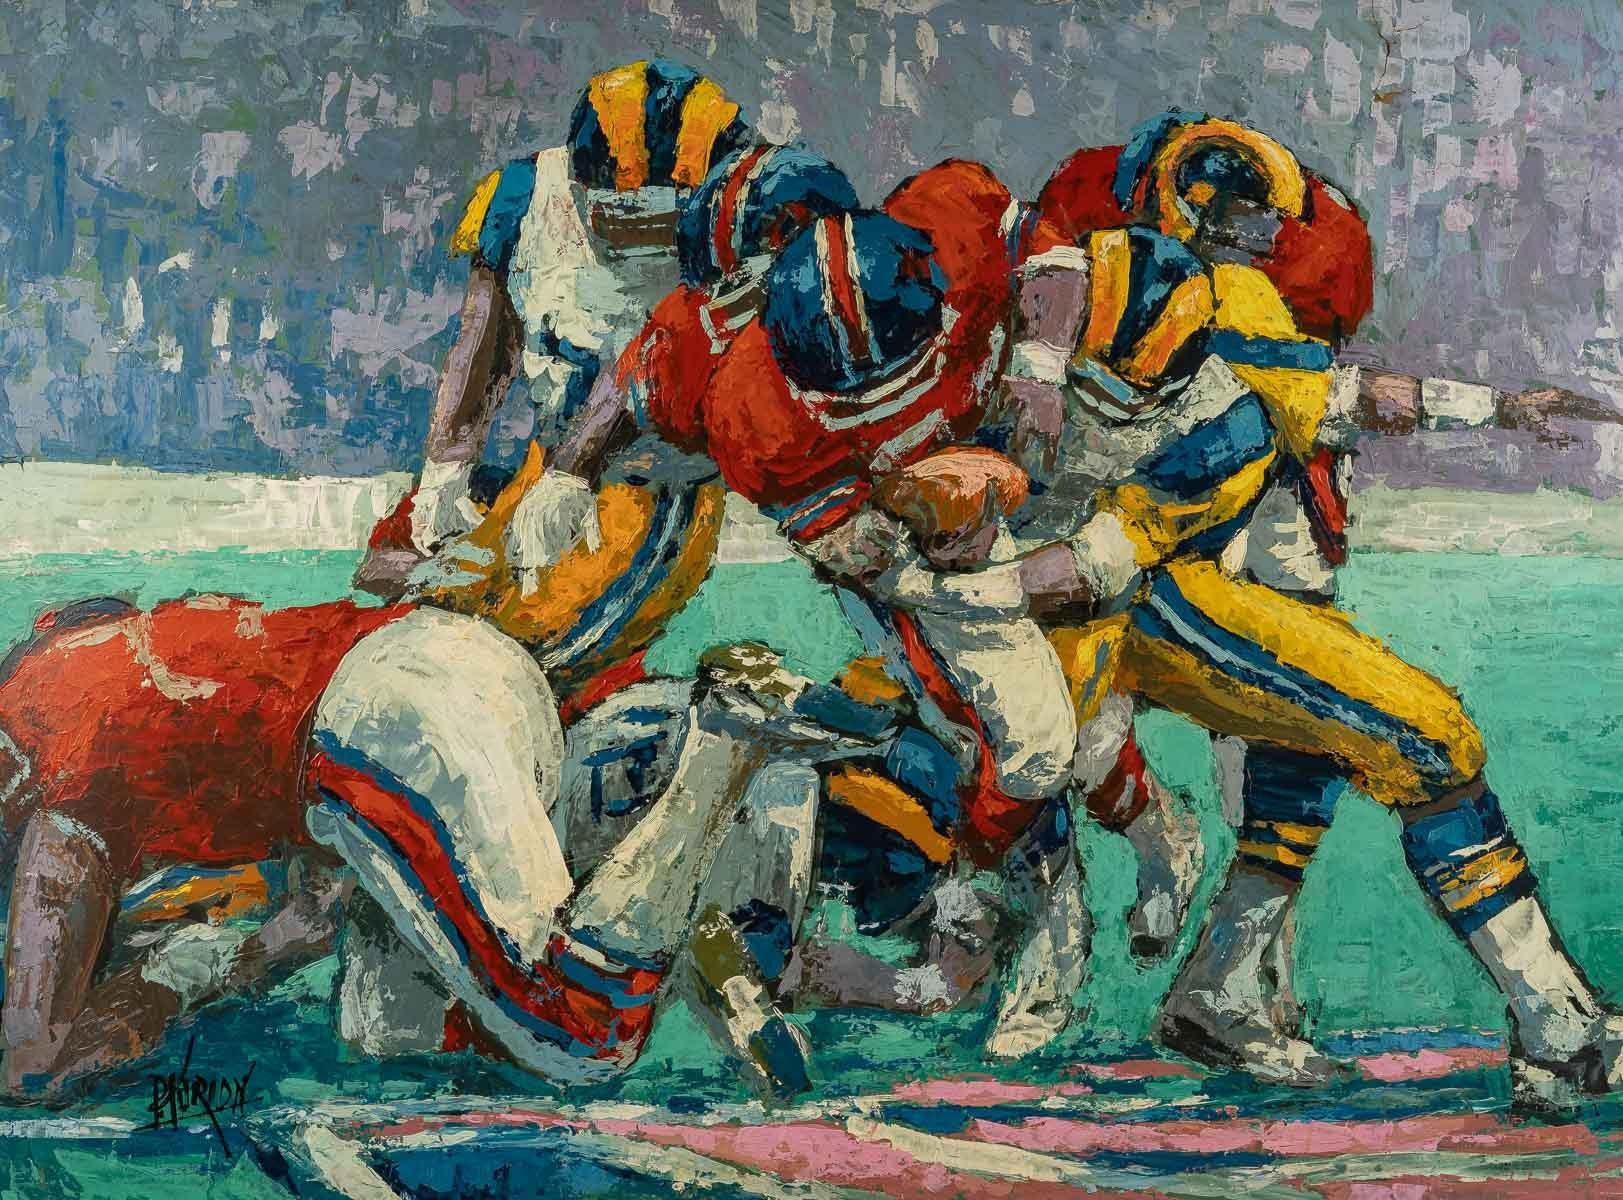 Important American Football painting, oil on isorel, 20th century.
Canvas - H: 95 cm, W: 130 cm, D: 3 cm
Frame - H: 108 cm, W: 141 cm, D: 3 cm.